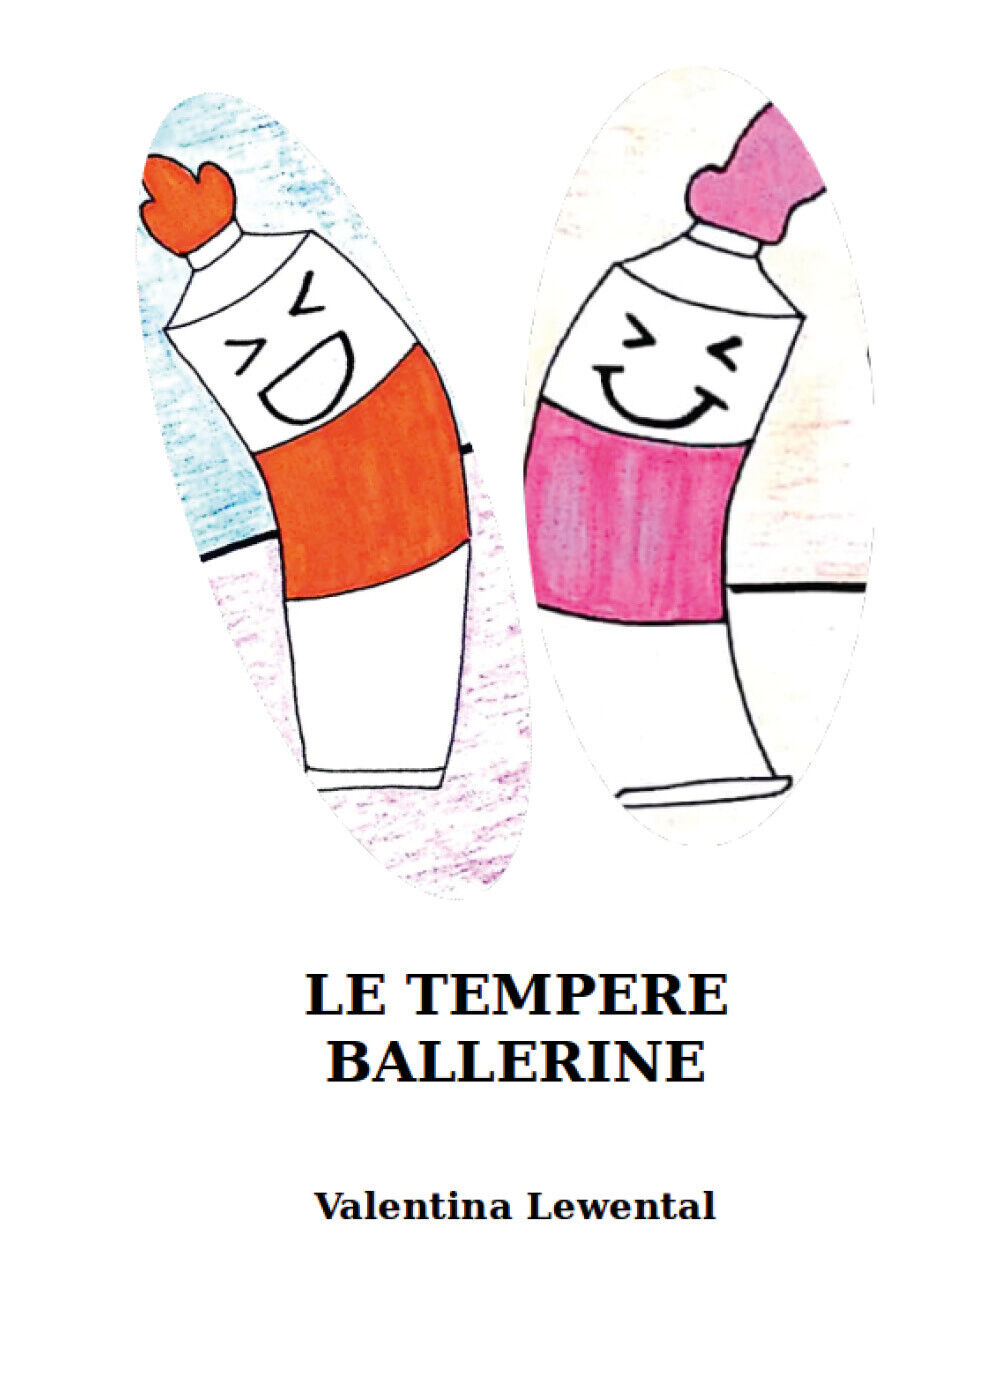   Le Tempere Ballerine - Valentina Lewental,  2020,  Youcanprint